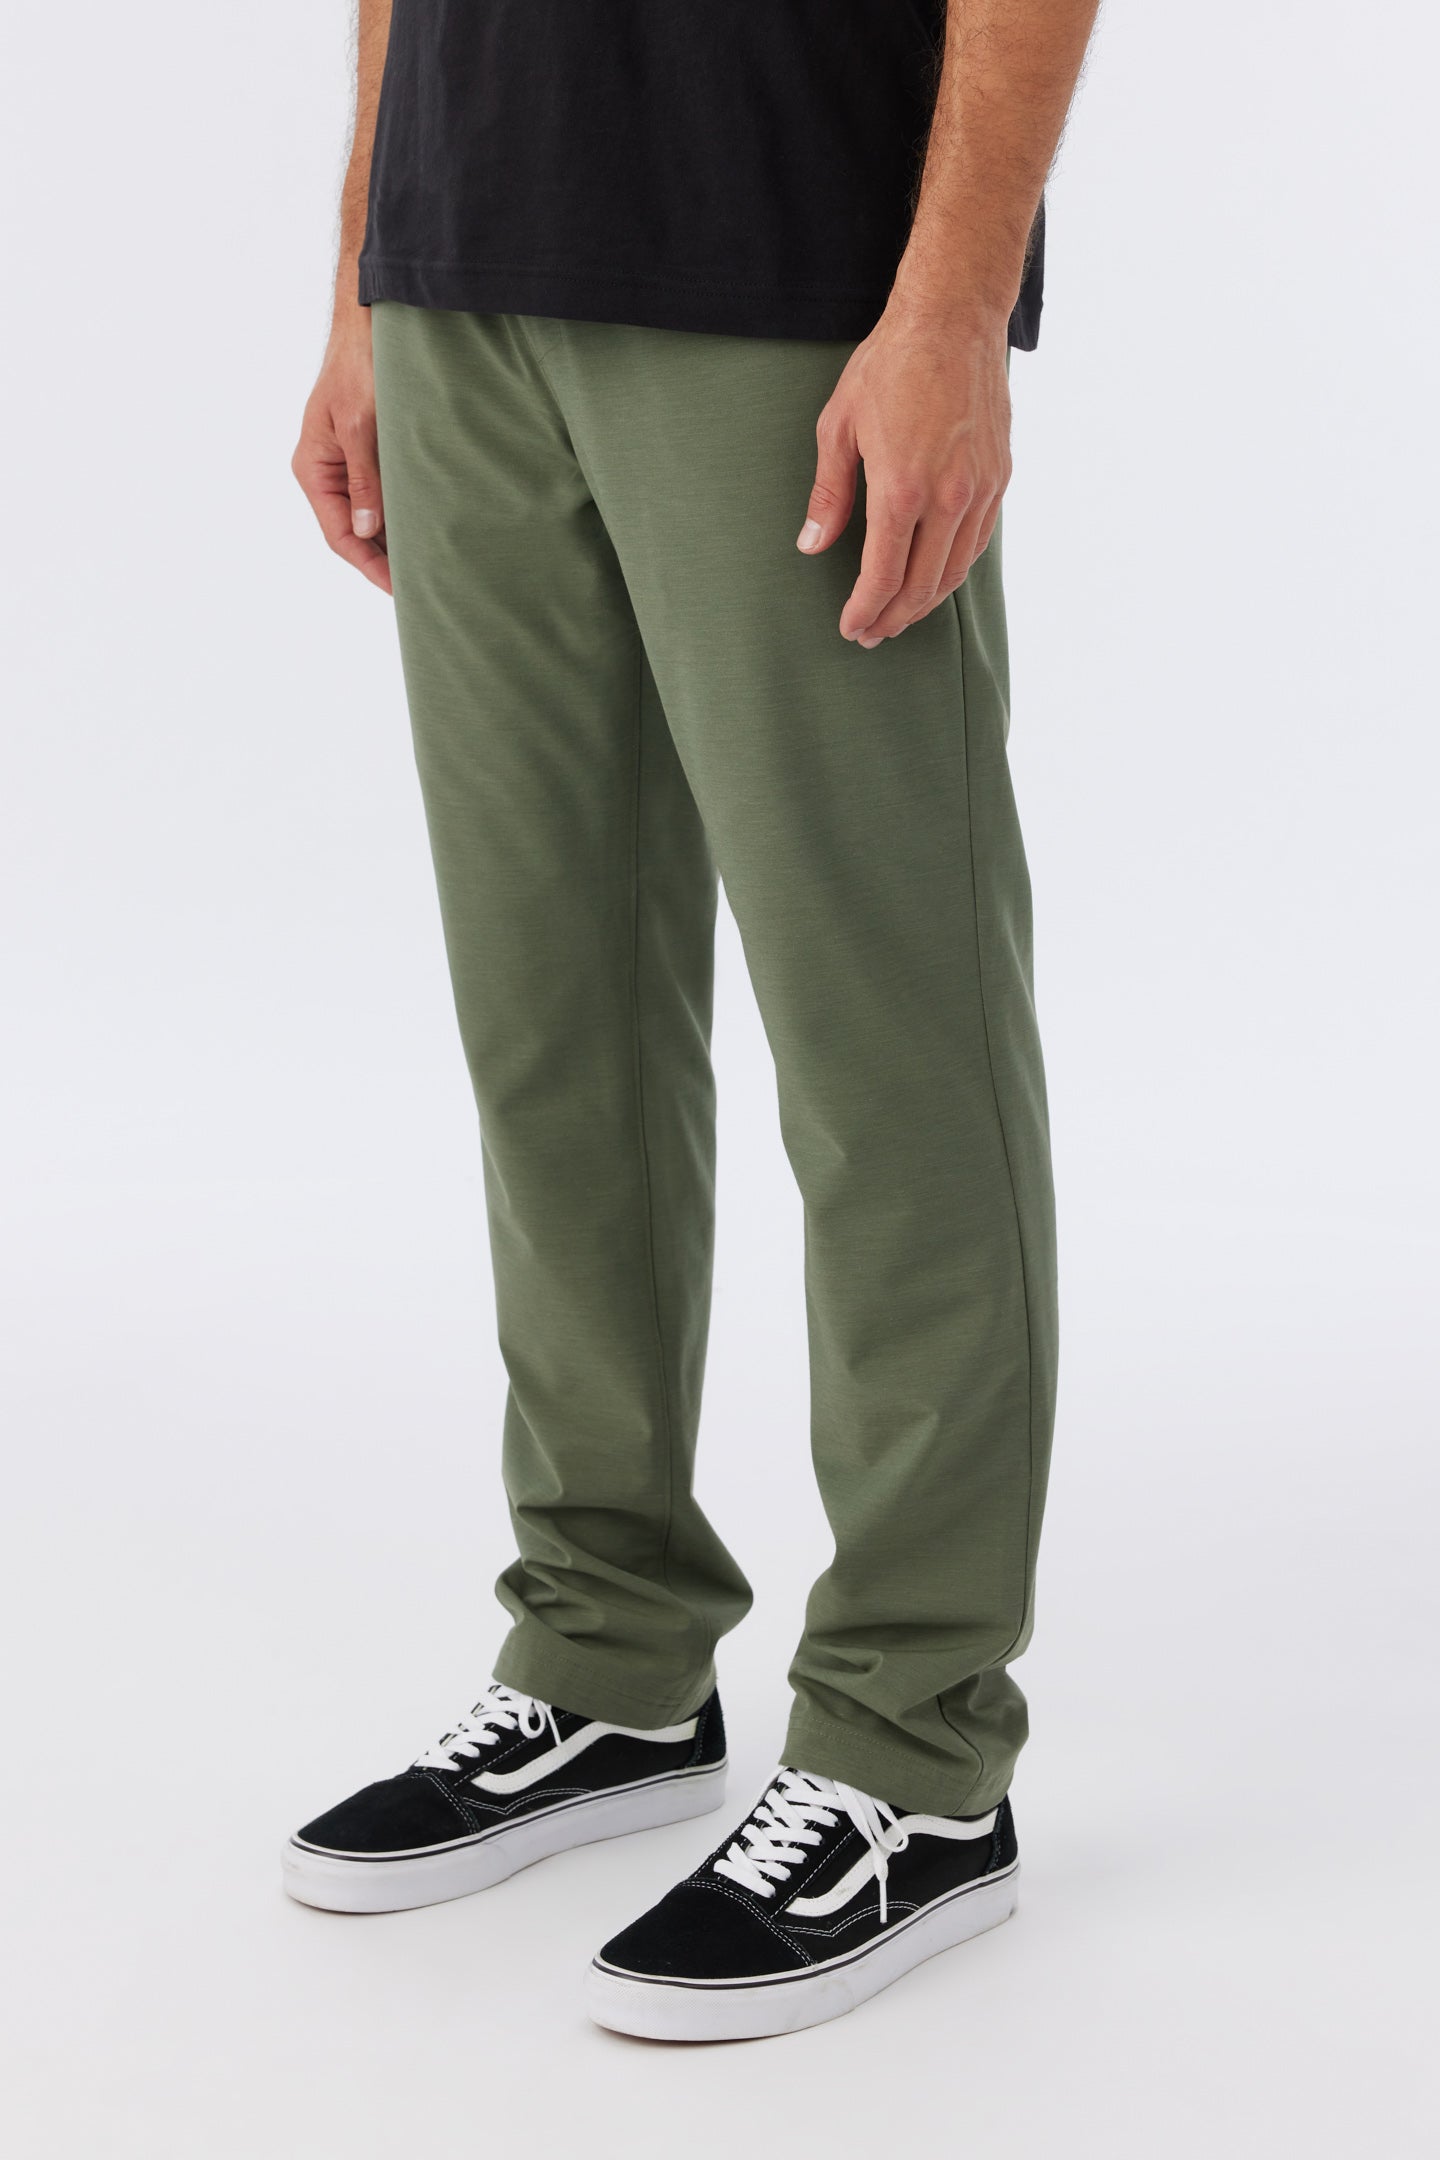 Venture Elastic Waist Lined Hybrid Pants - Dark Olive | O'Neill